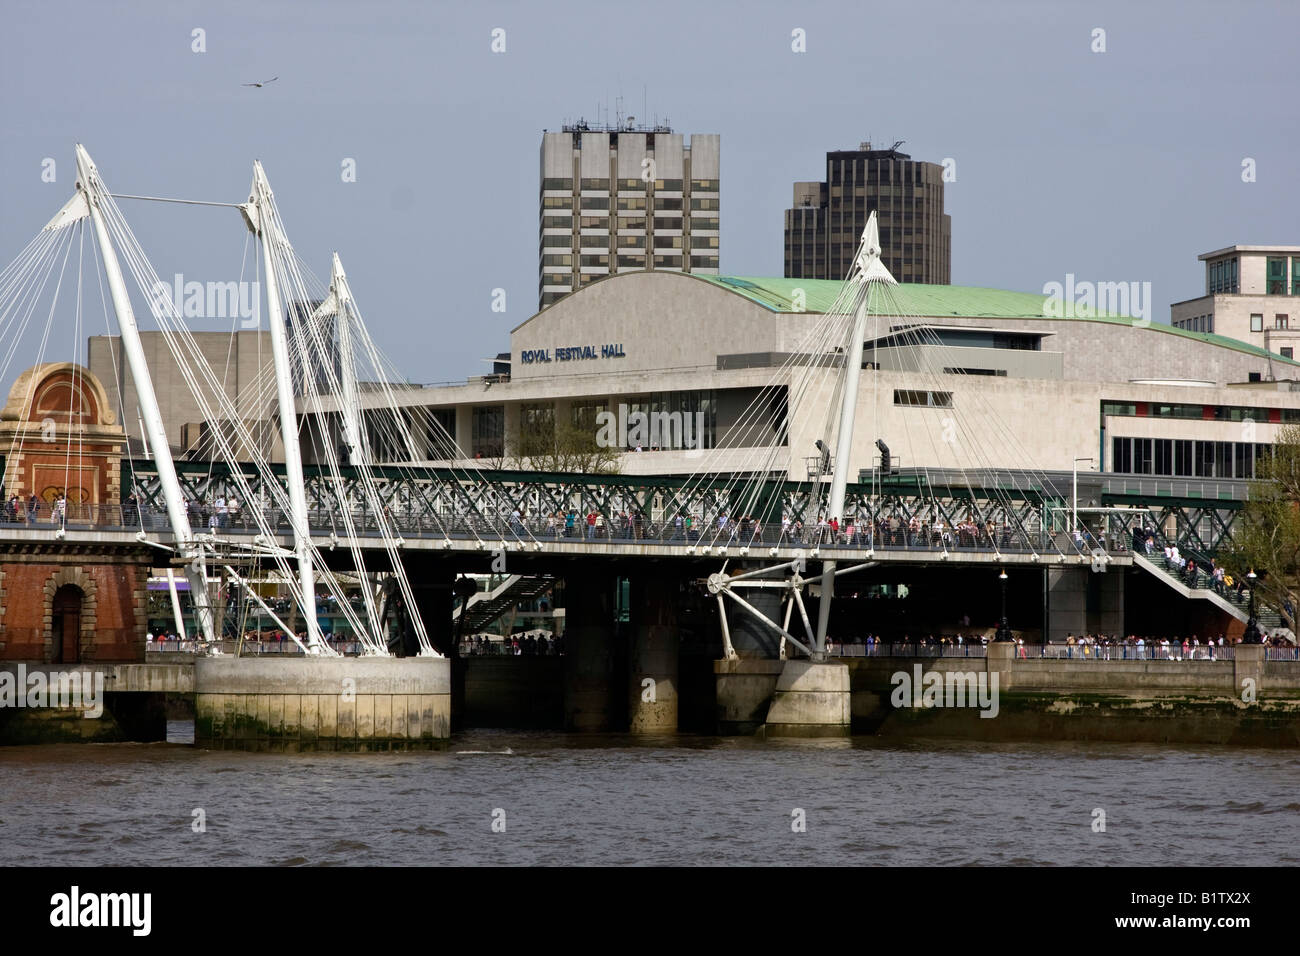 Royal Festival Hall and the Golden Jubilee Bridge, London England Stock Photo